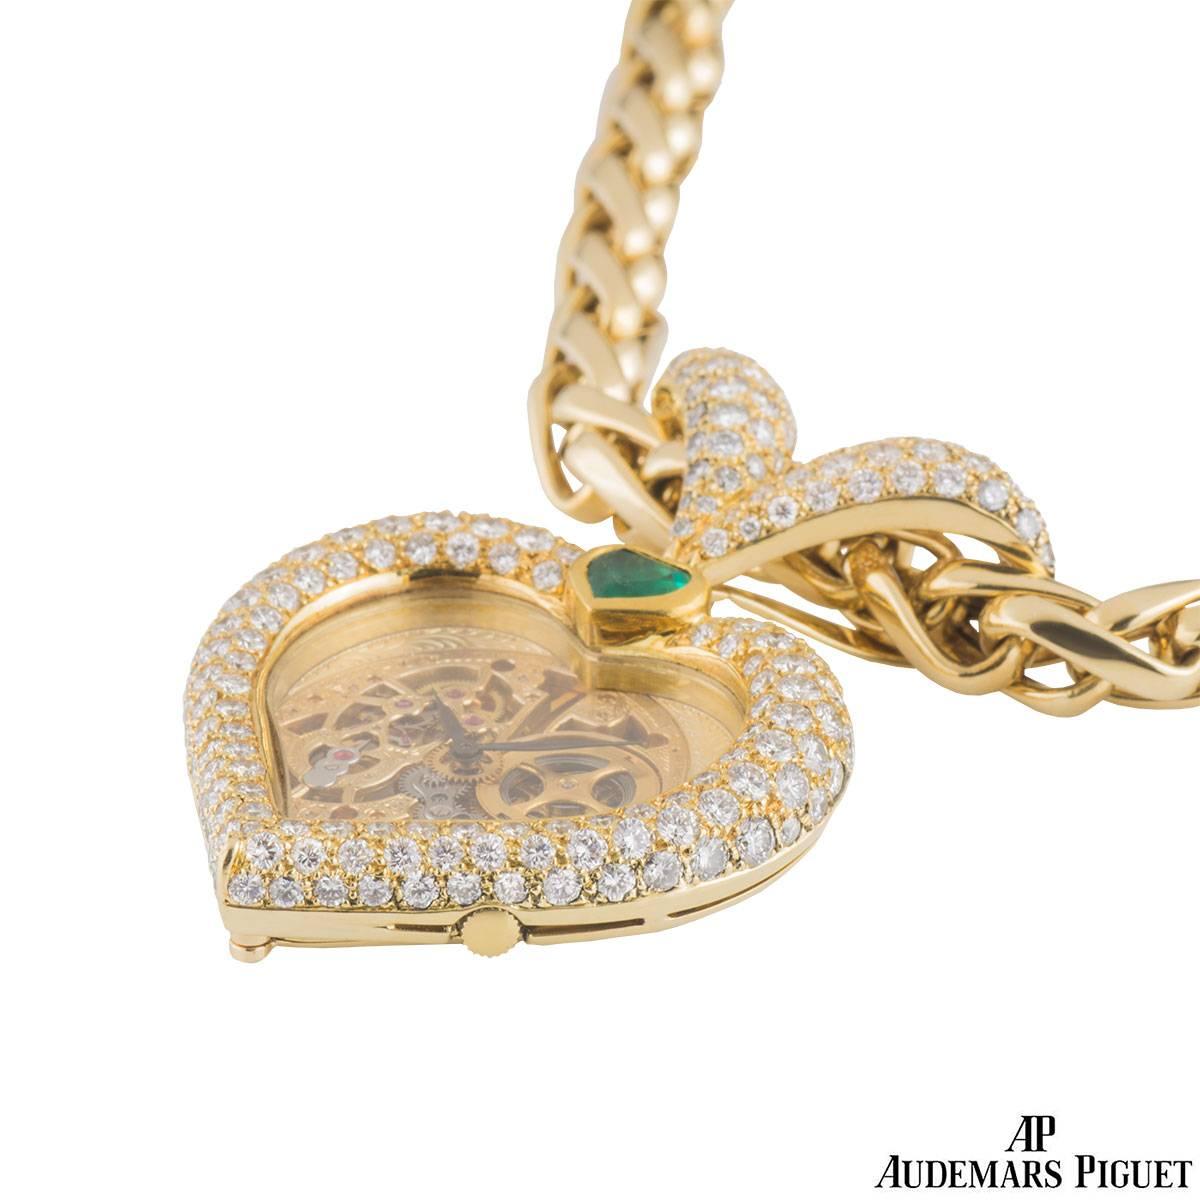 Women's or Men's Audemars Piguet Diamond and Emerald Pendant Watch Necklace